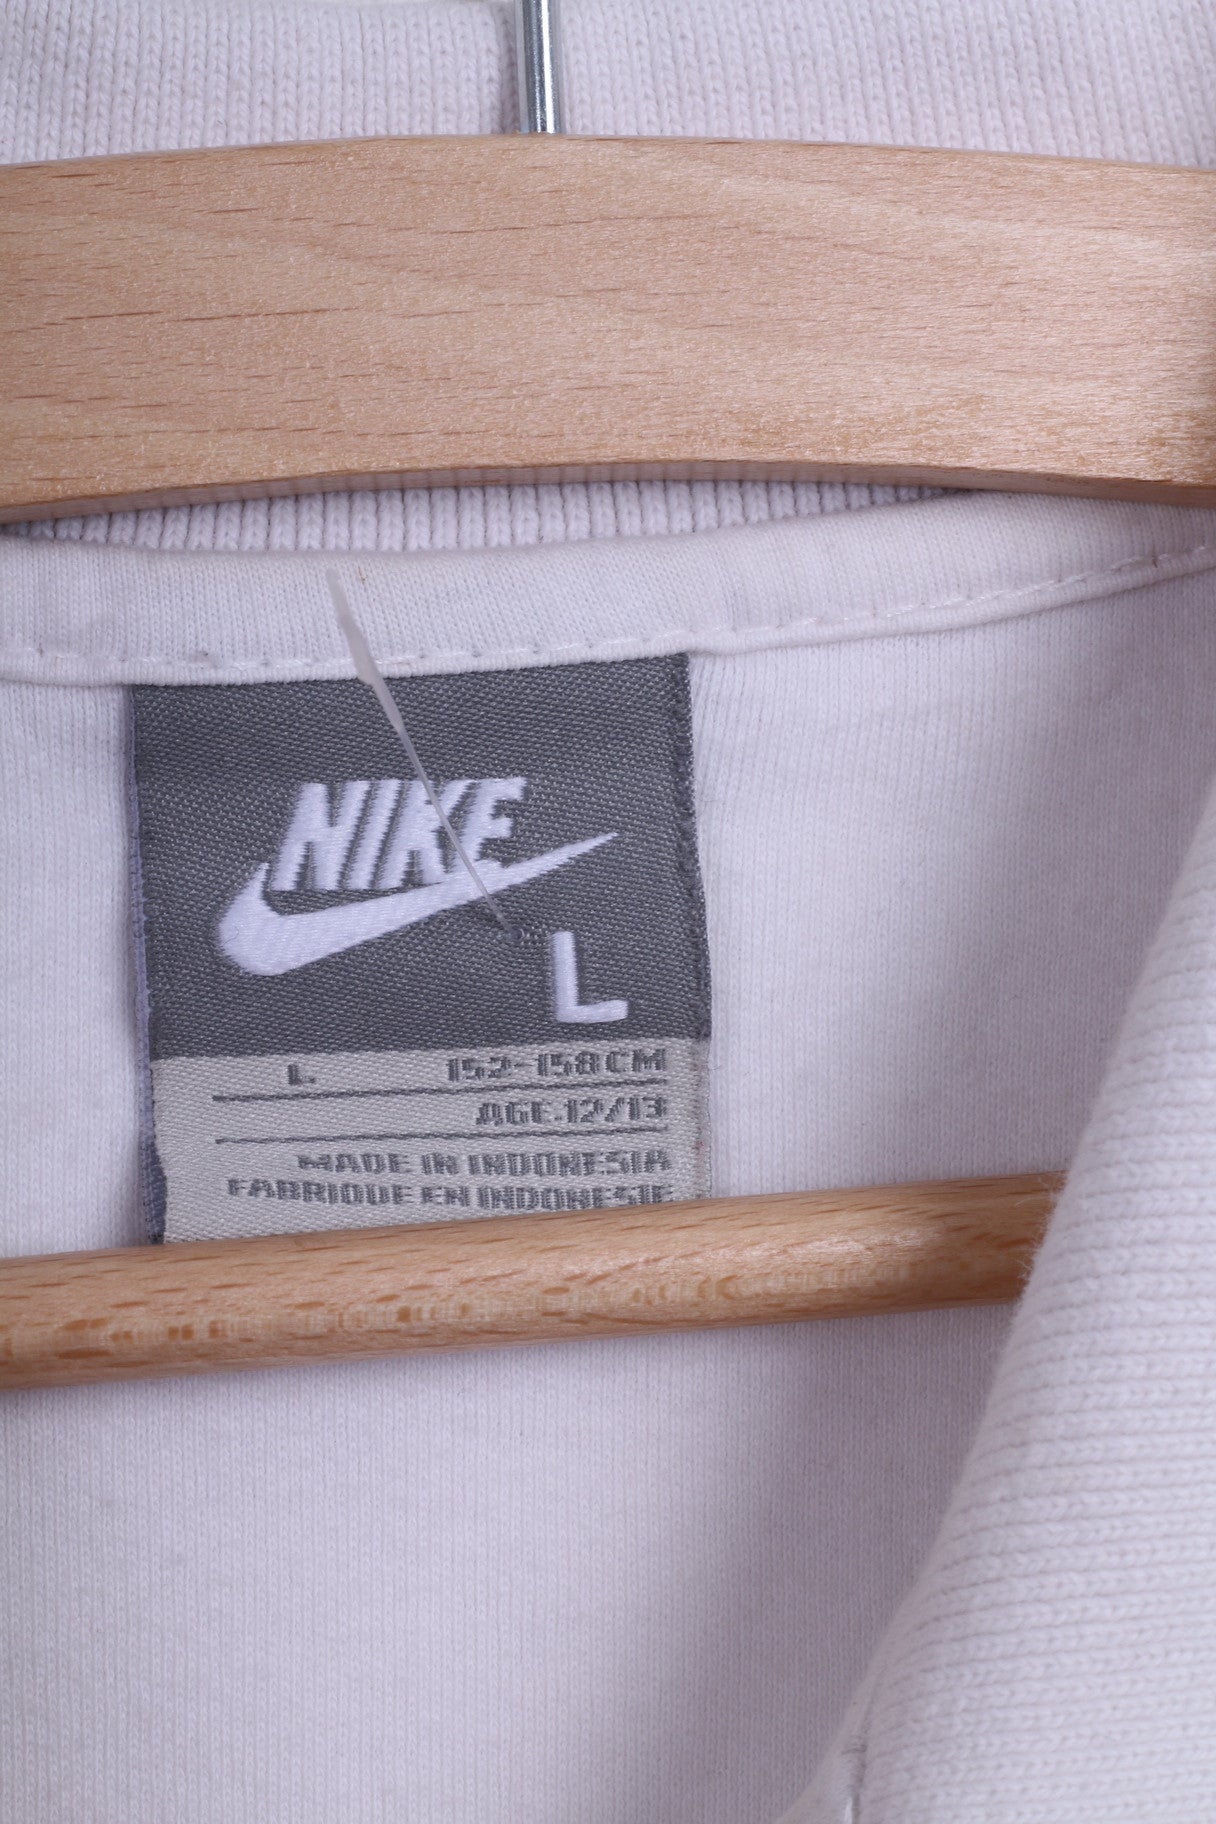 Nike Boys L (152-158)Age12/13 Polo Shirt White Cotton Sport - RetrospectClothes